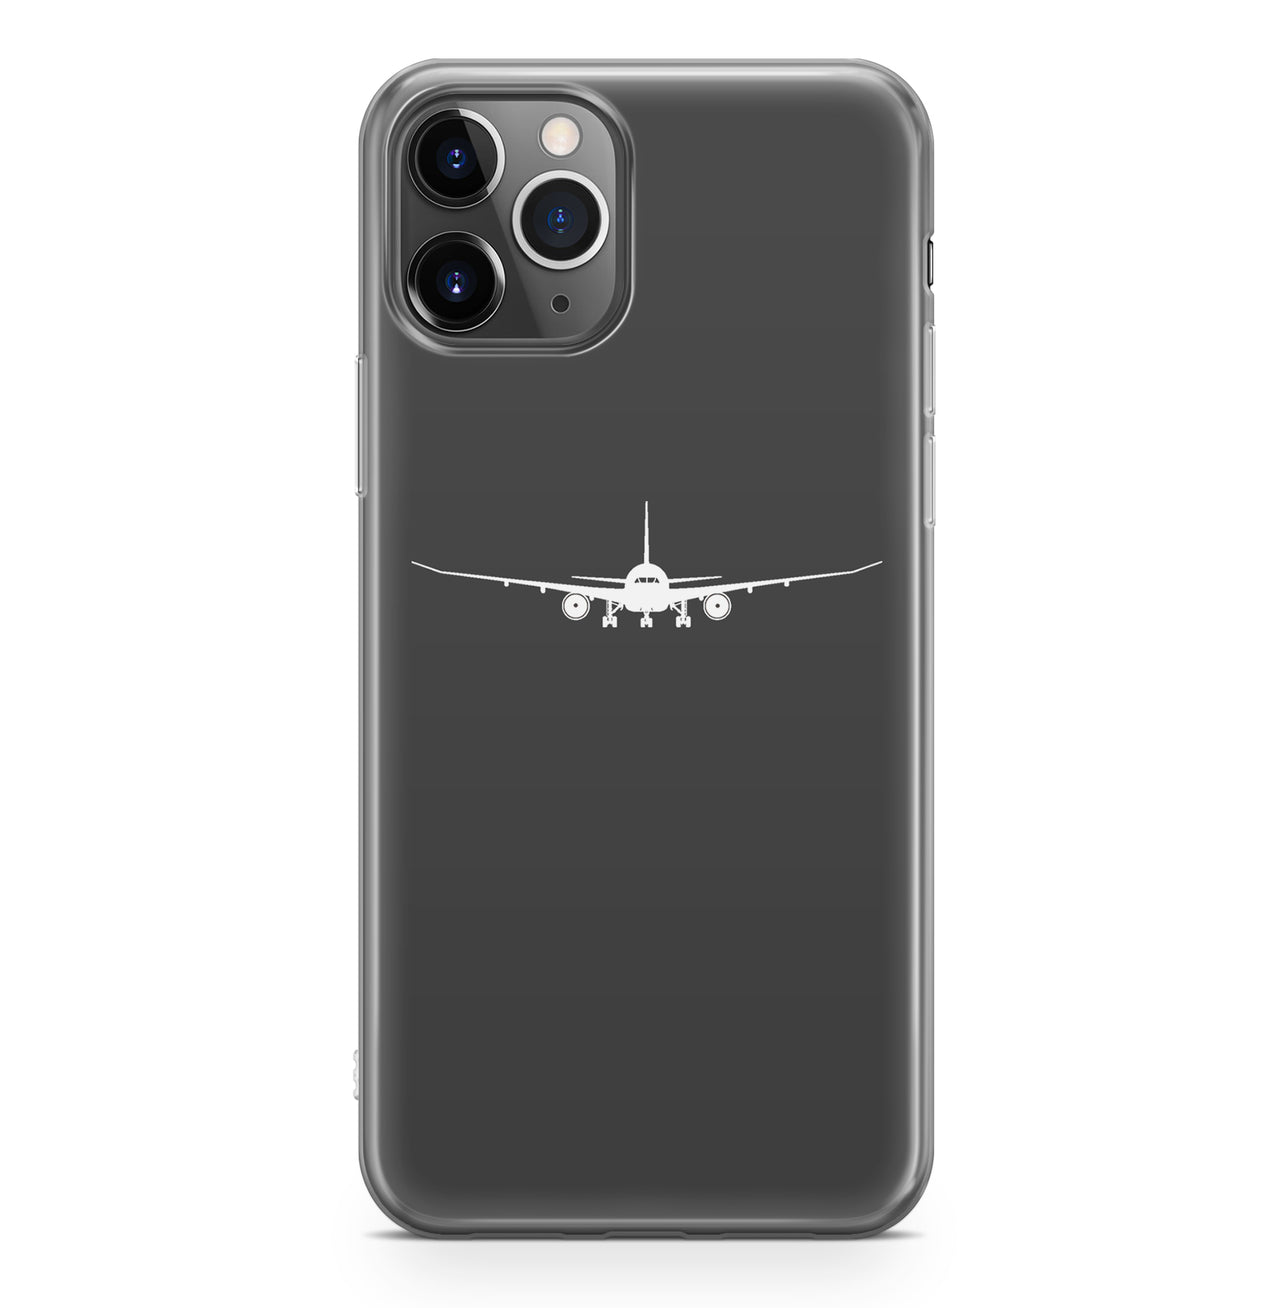 Boeing 787 Silhouette Designed iPhone Cases